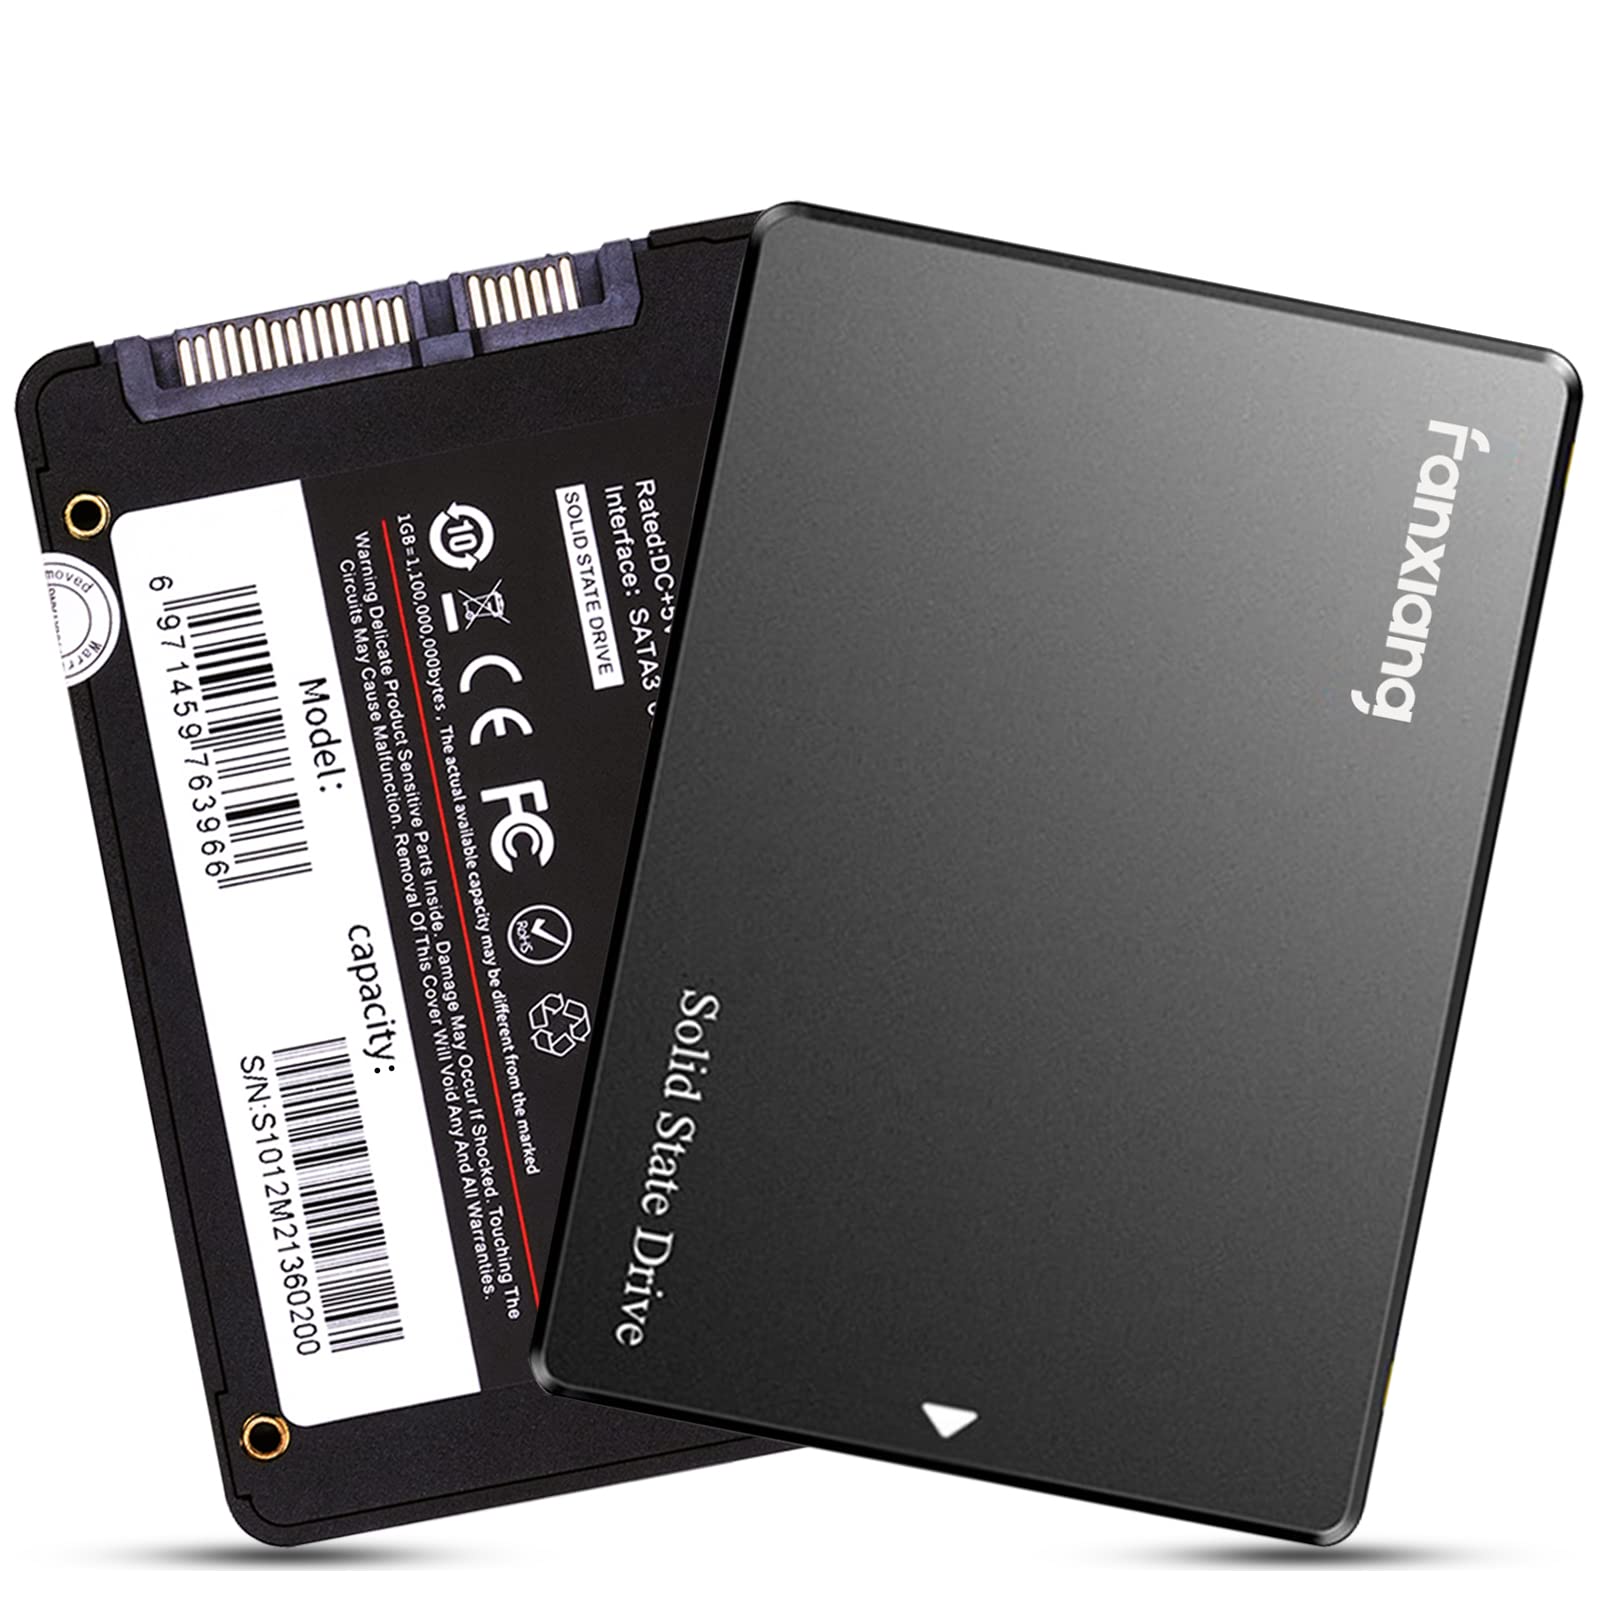 fanxiang S101 512GB SSD SATA III 6Gb/s 2.5